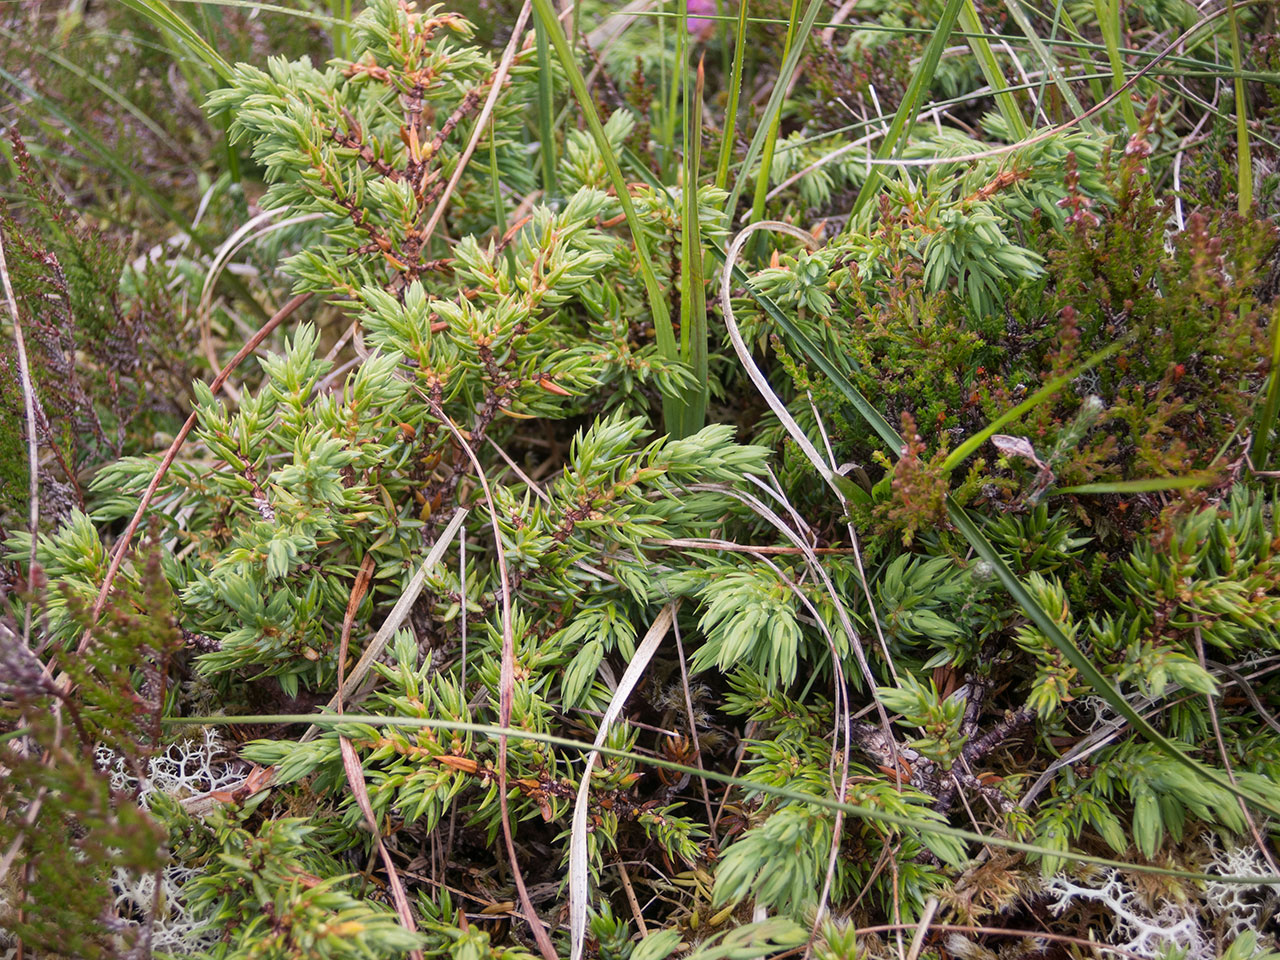 Juniper plant on the Lewis moorland